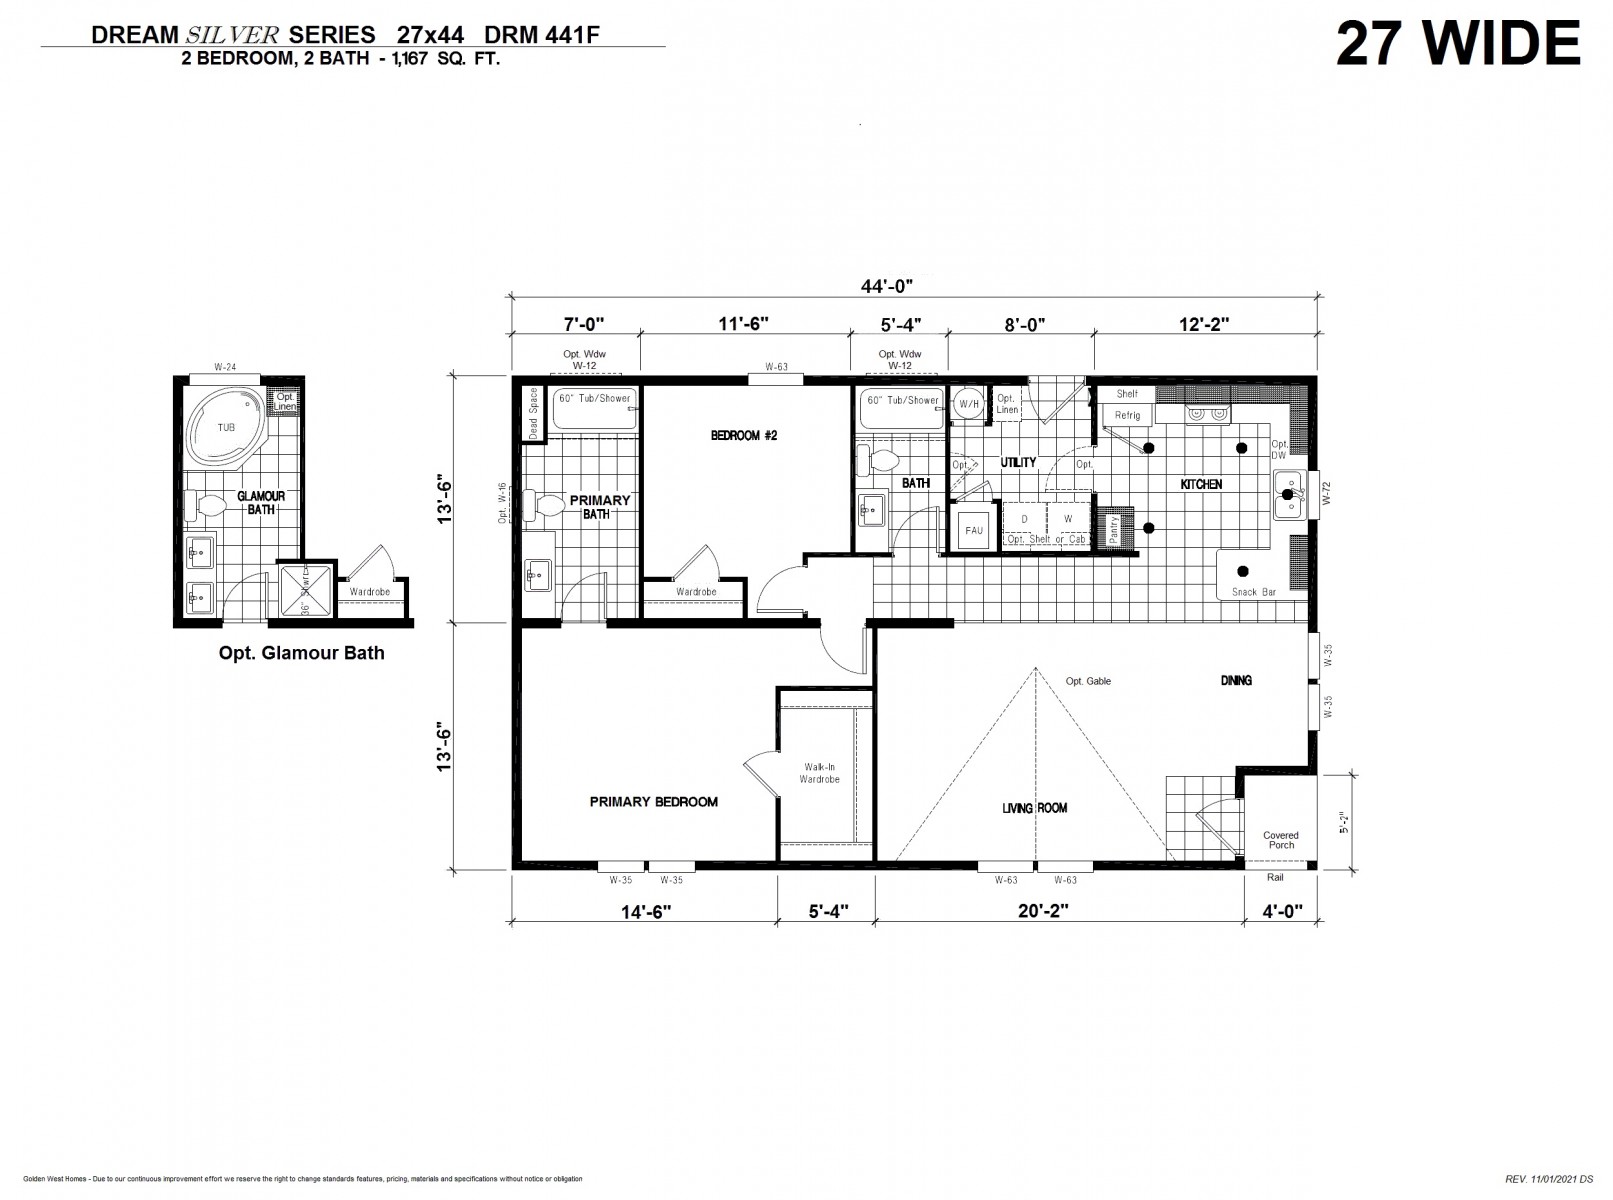 Homes Direct Modular Homes - Model DRM441F - Floorplan